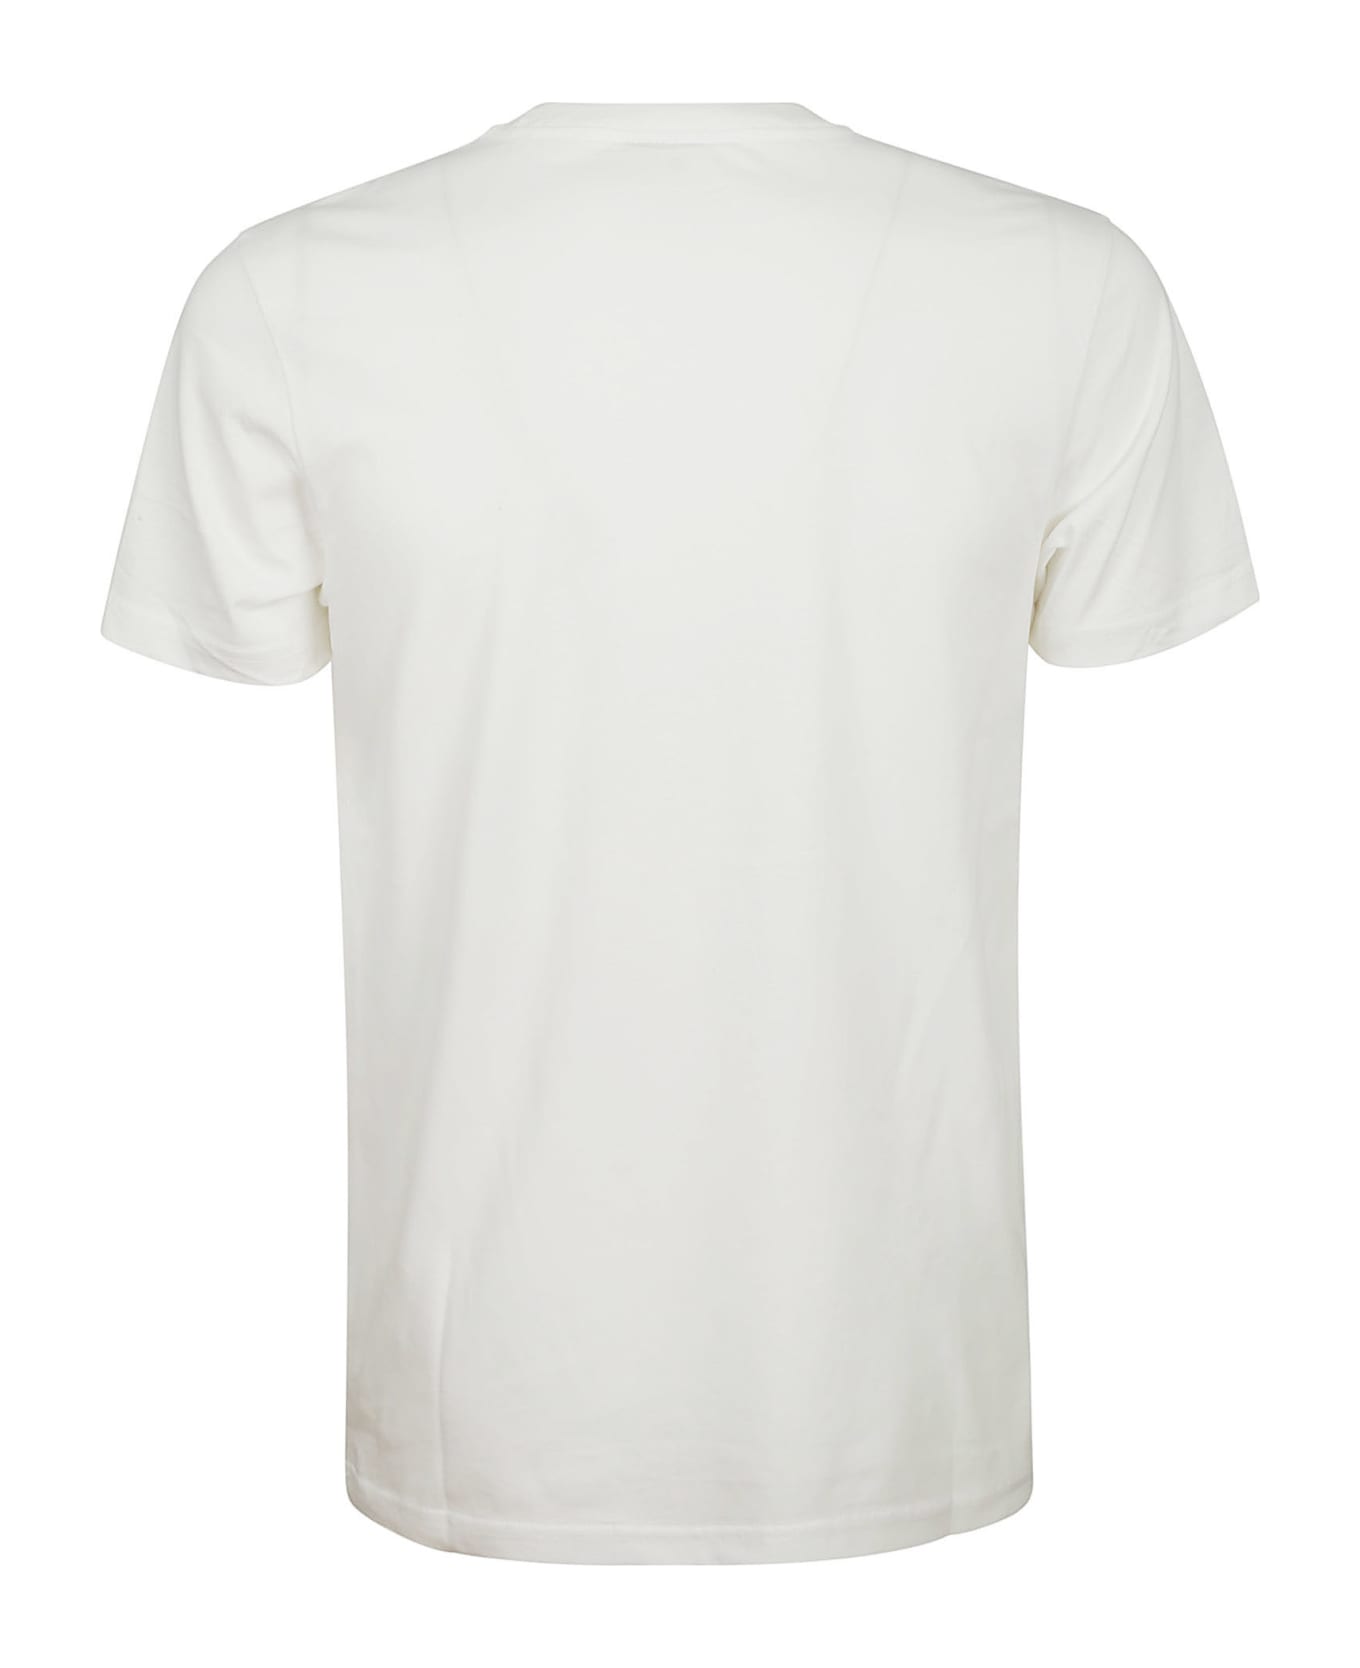 Paul Smith Slim Fit T-shirt Bottle Tops - White